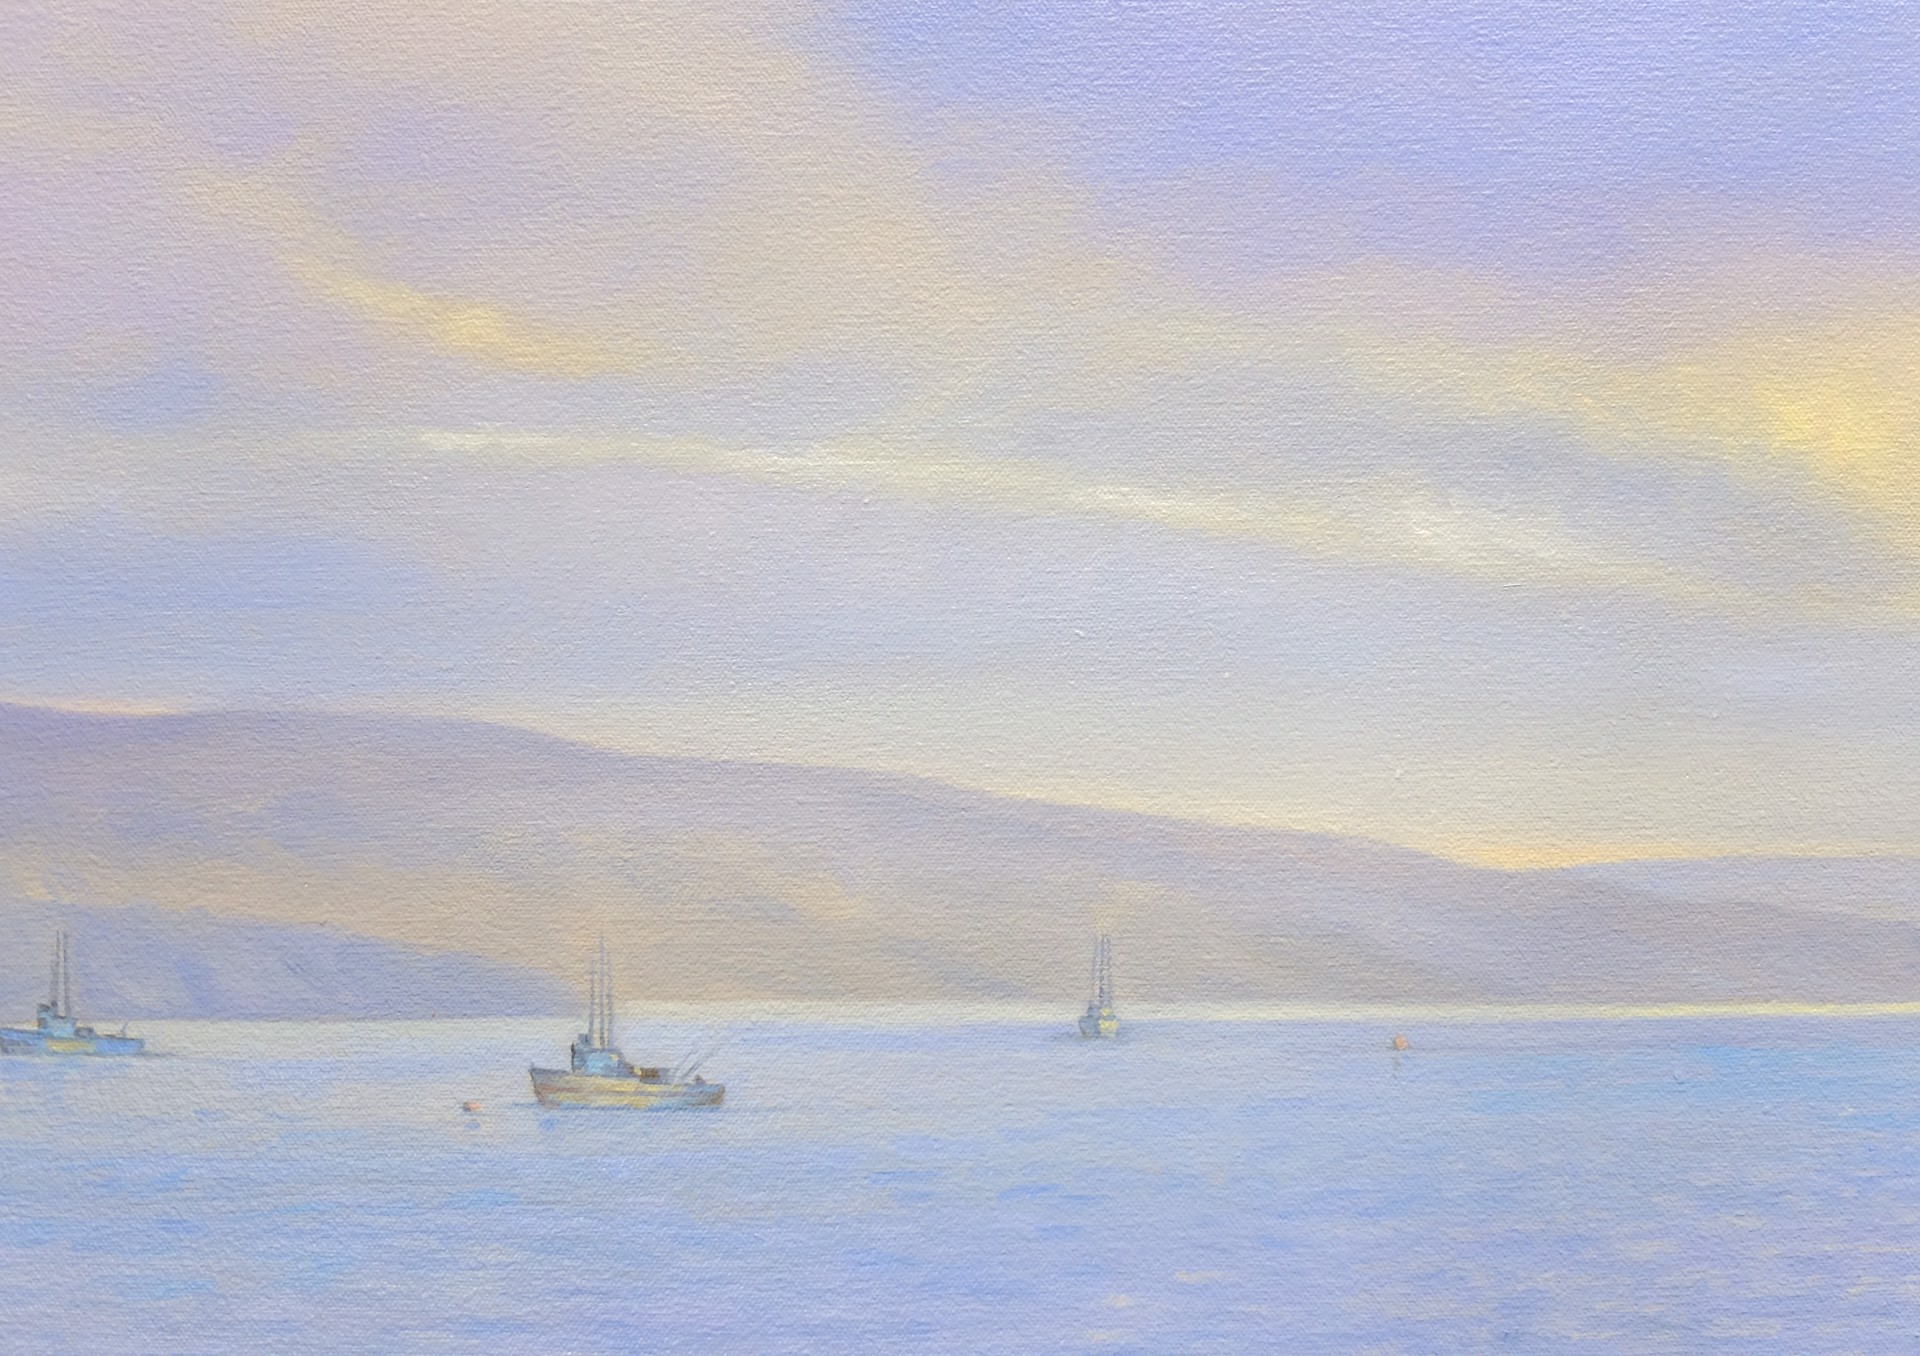 Tomales Bay Evening by Willard Dixon